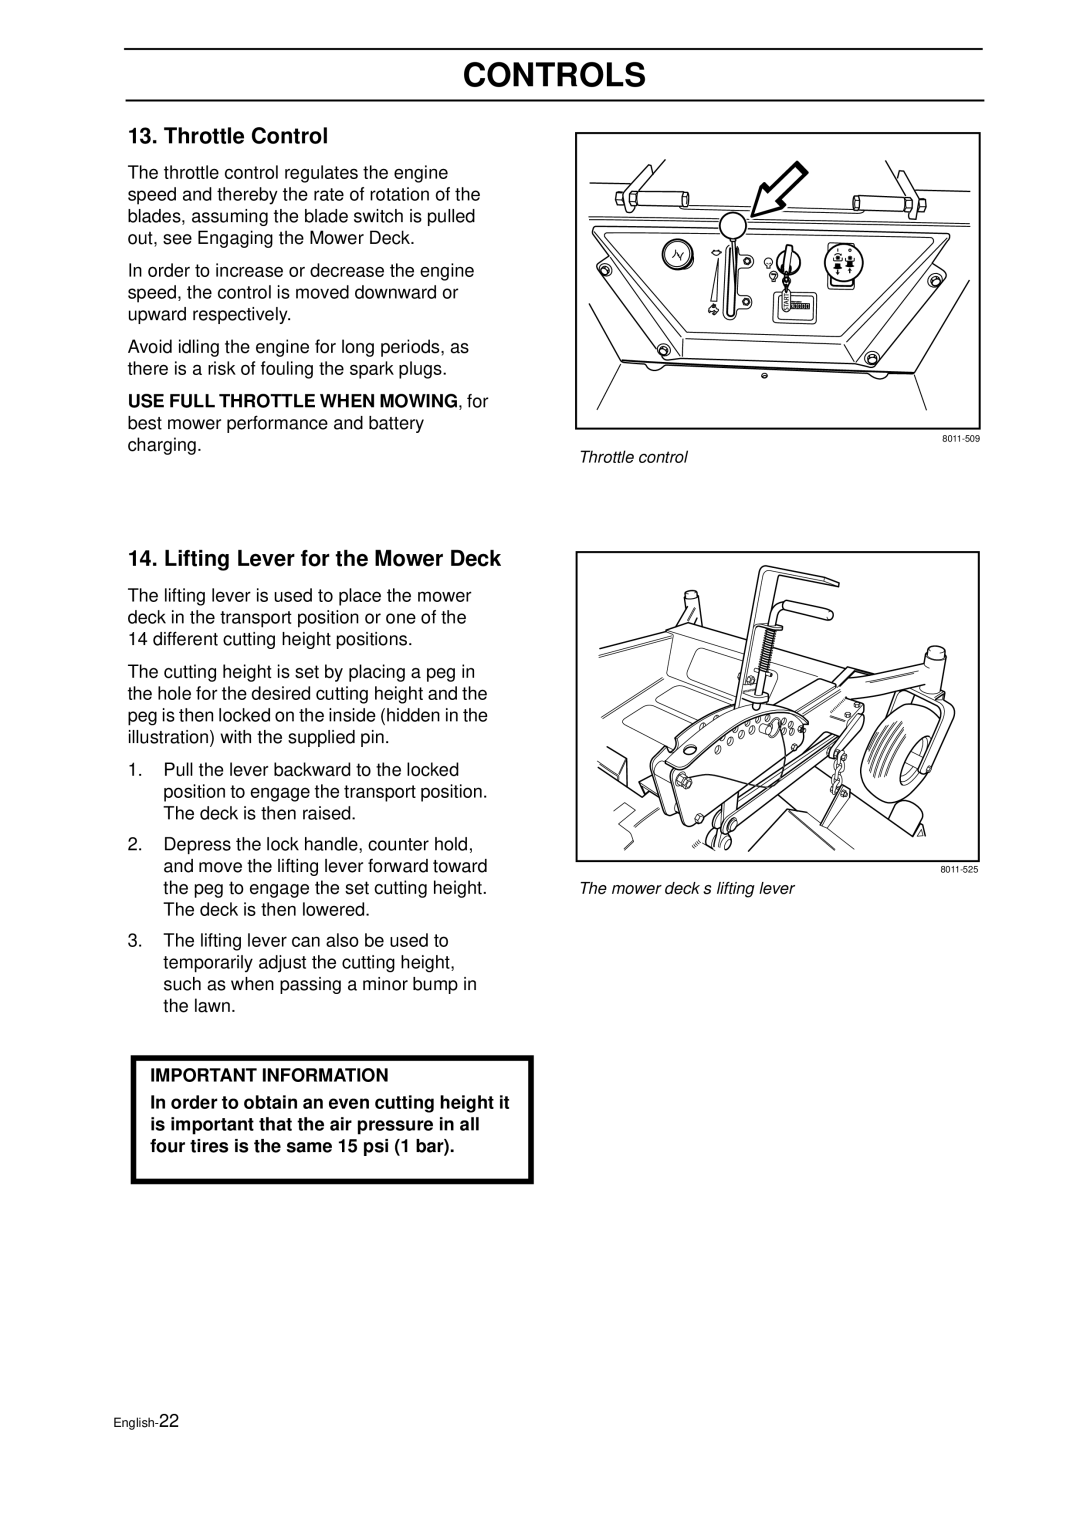 Husqvarna IZ 21 manual Throttle Control, Lifting Lever for the Mower Deck, Controls, Important Information 